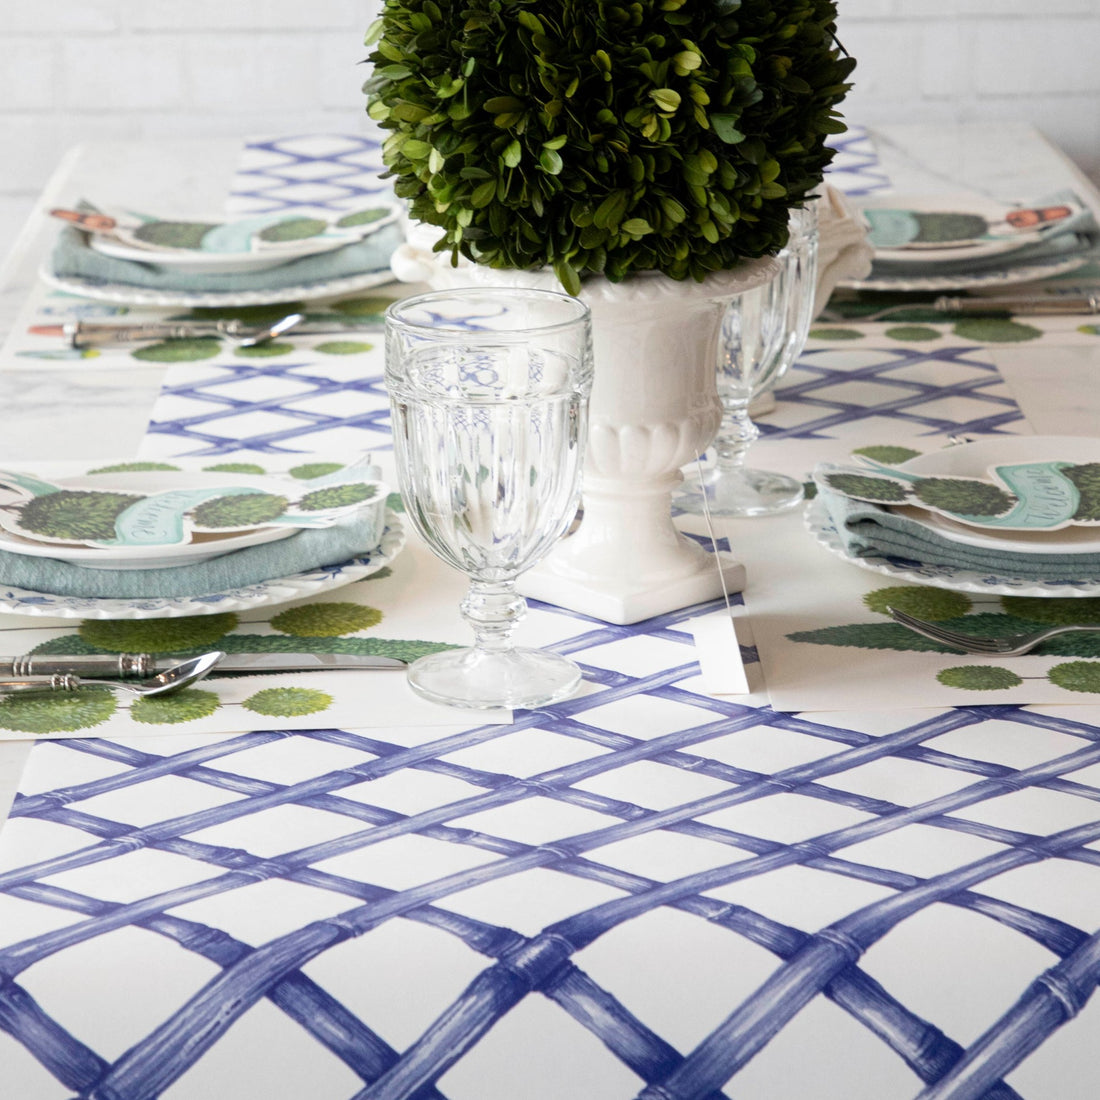 The Blue Lattice Runner under an elegant topiary-themed table setting.